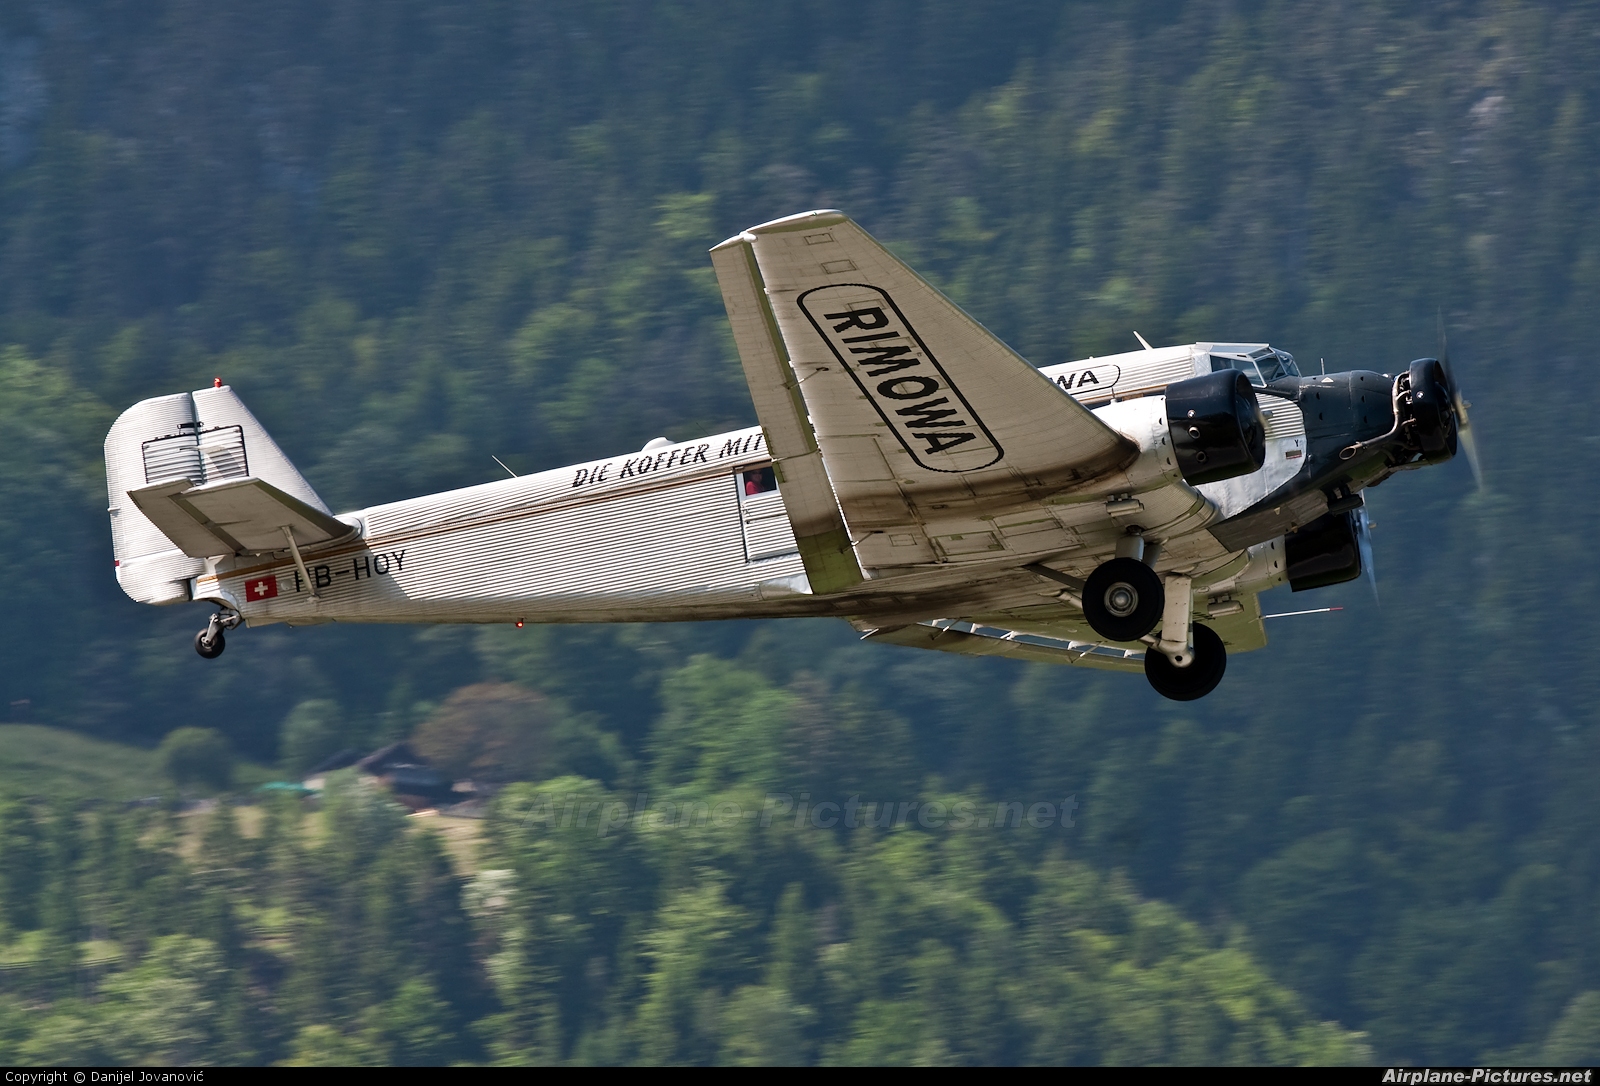 Ju-Air HB-HOY aircraft at Innsbruck